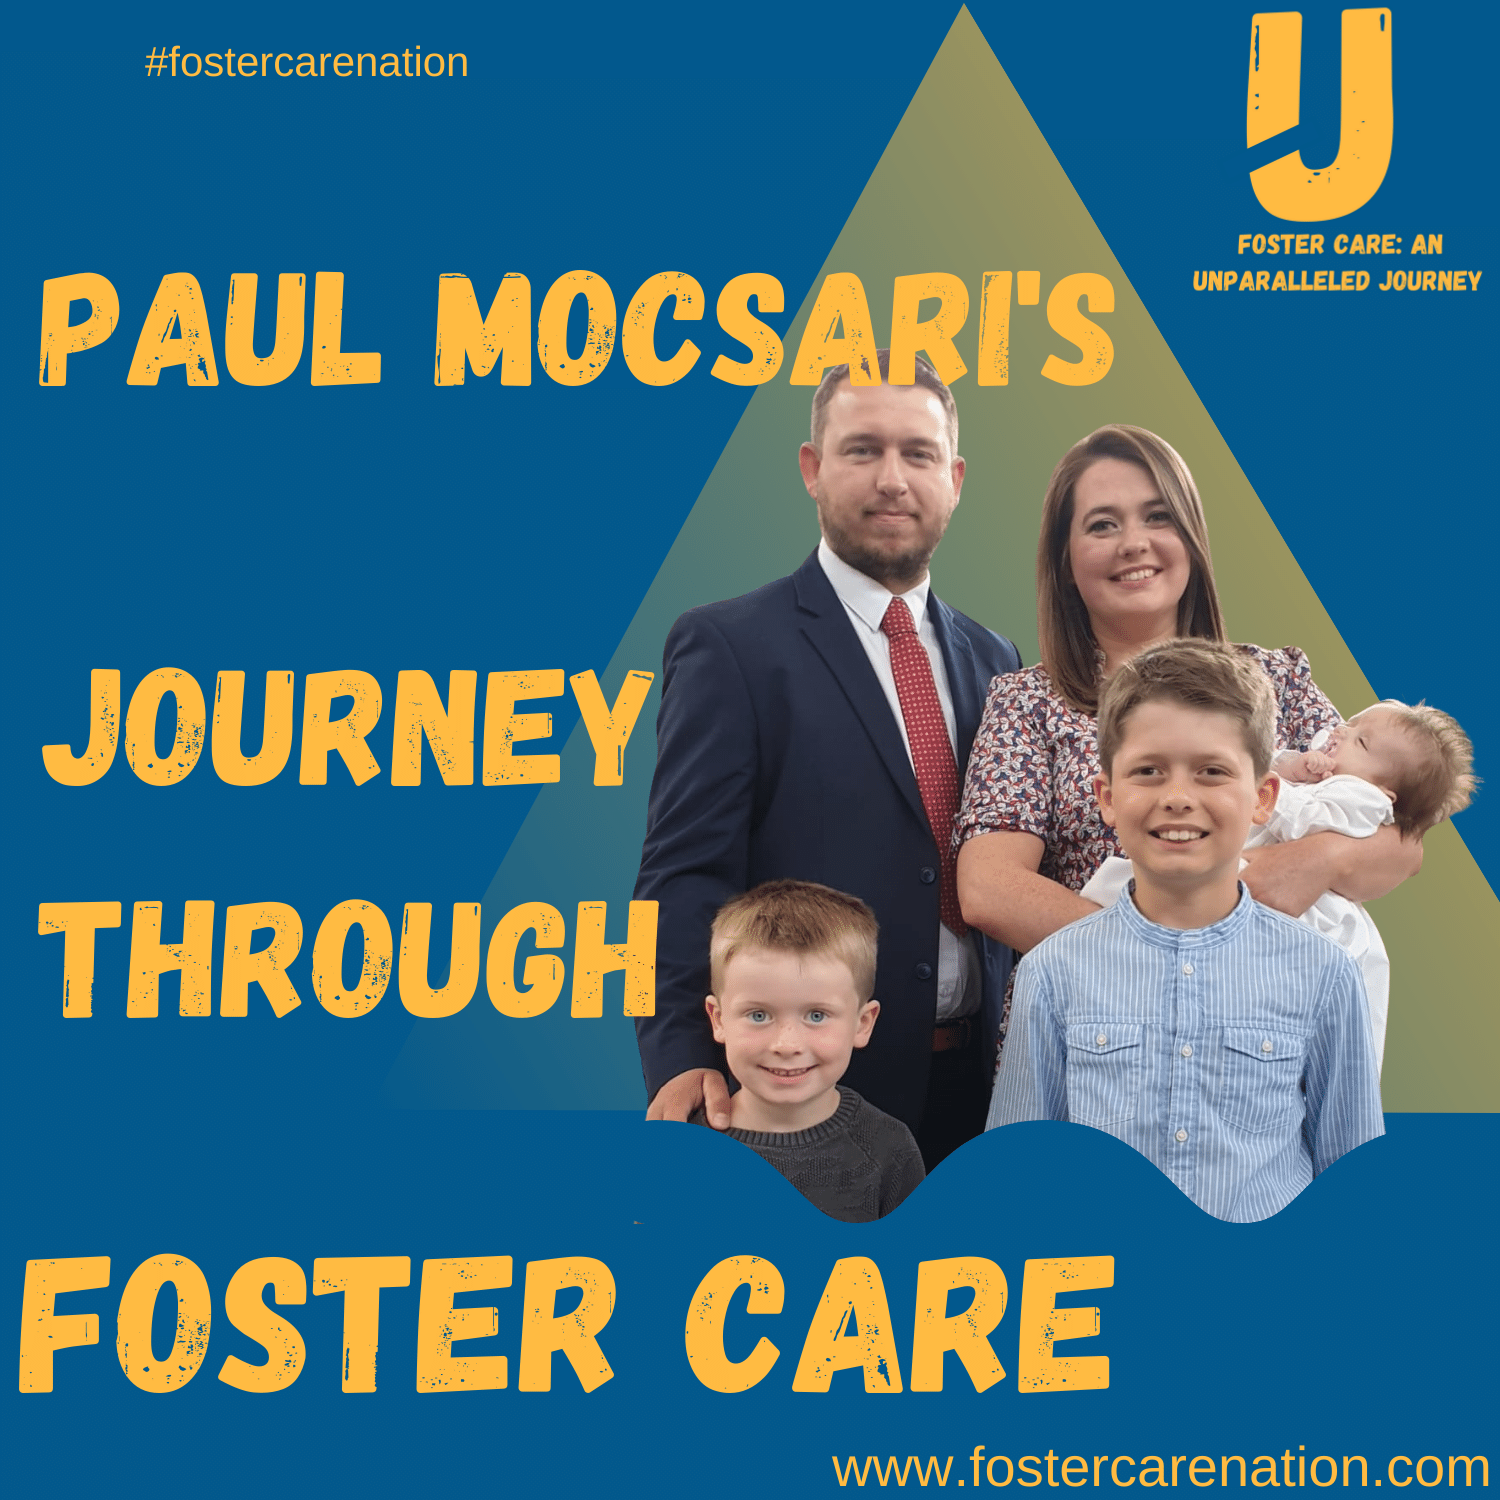 Paul Moscari's Journey through Foster Care